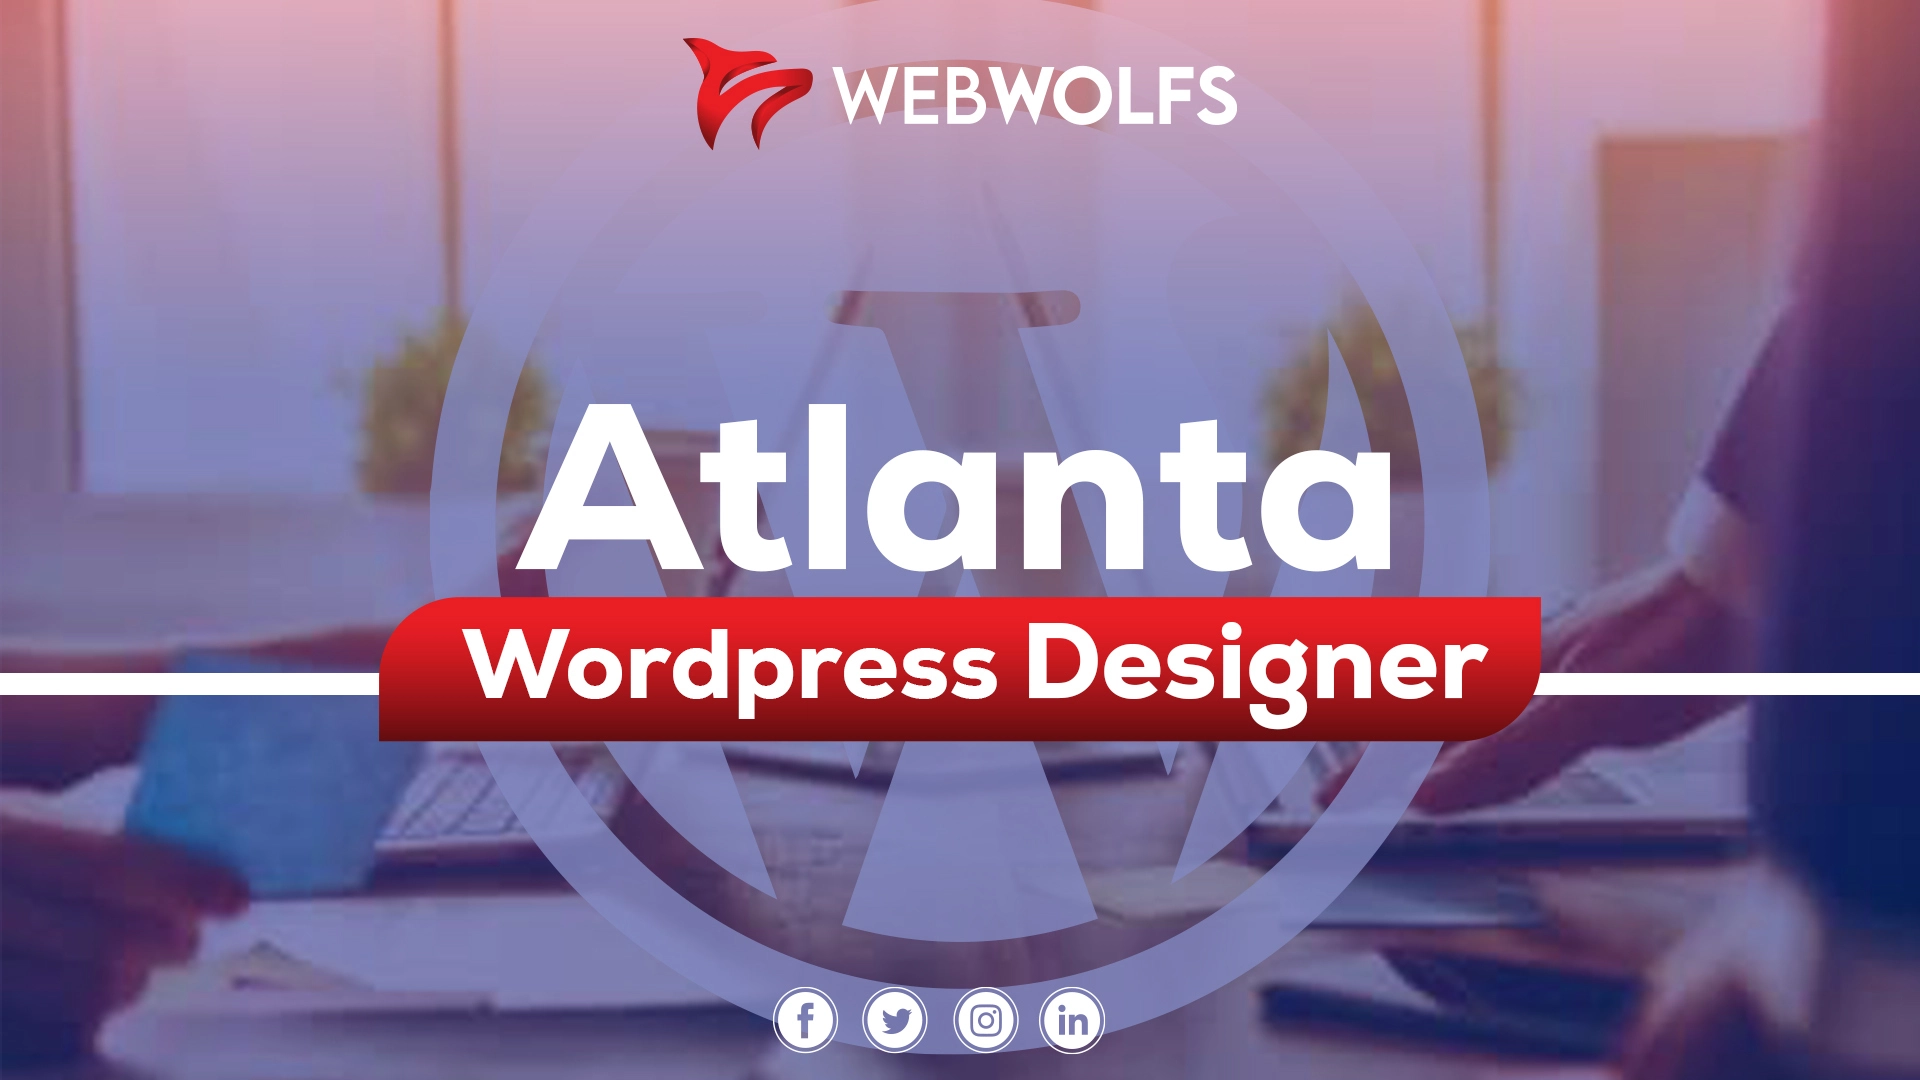 Atlanta WordPress Designer - Take Your Online Presence To The Next Level